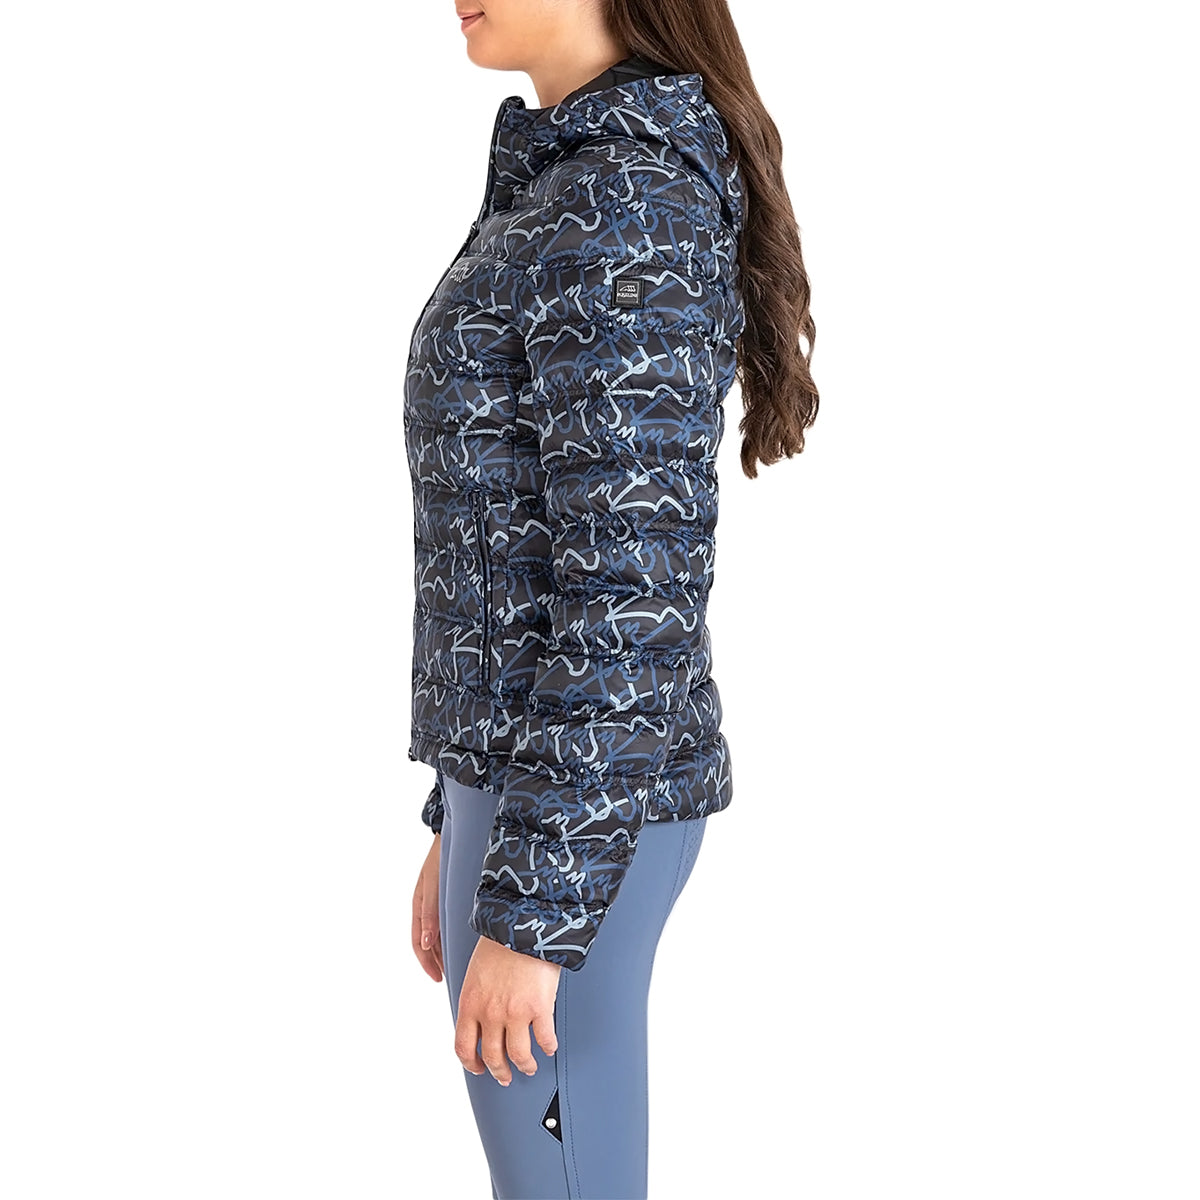 Equiline Women's Ecre Puffer Jacket-Sale